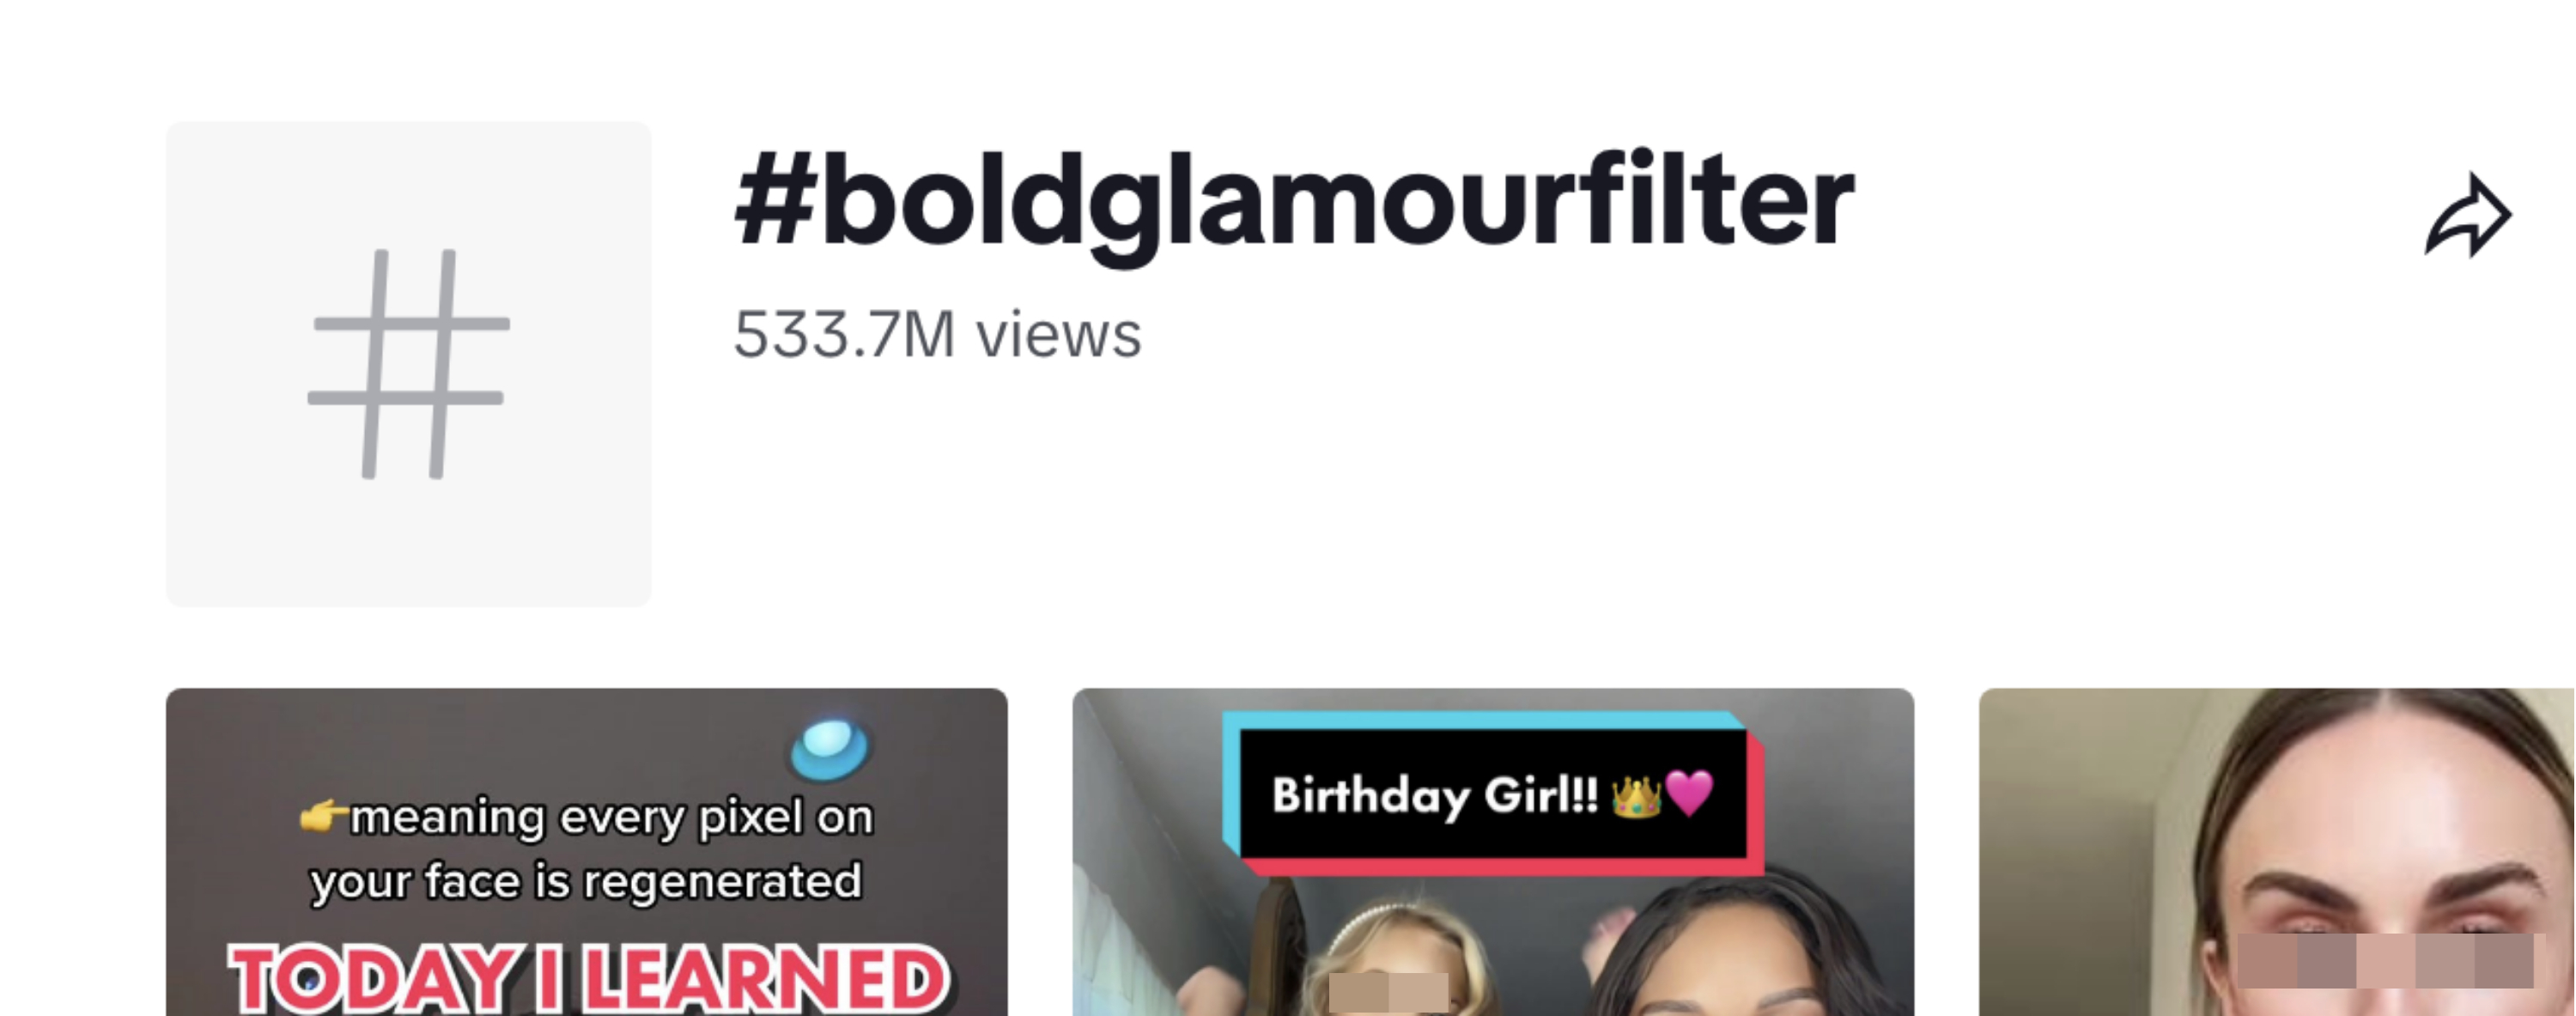 The #boldglamourfilter hashtag on TikTok